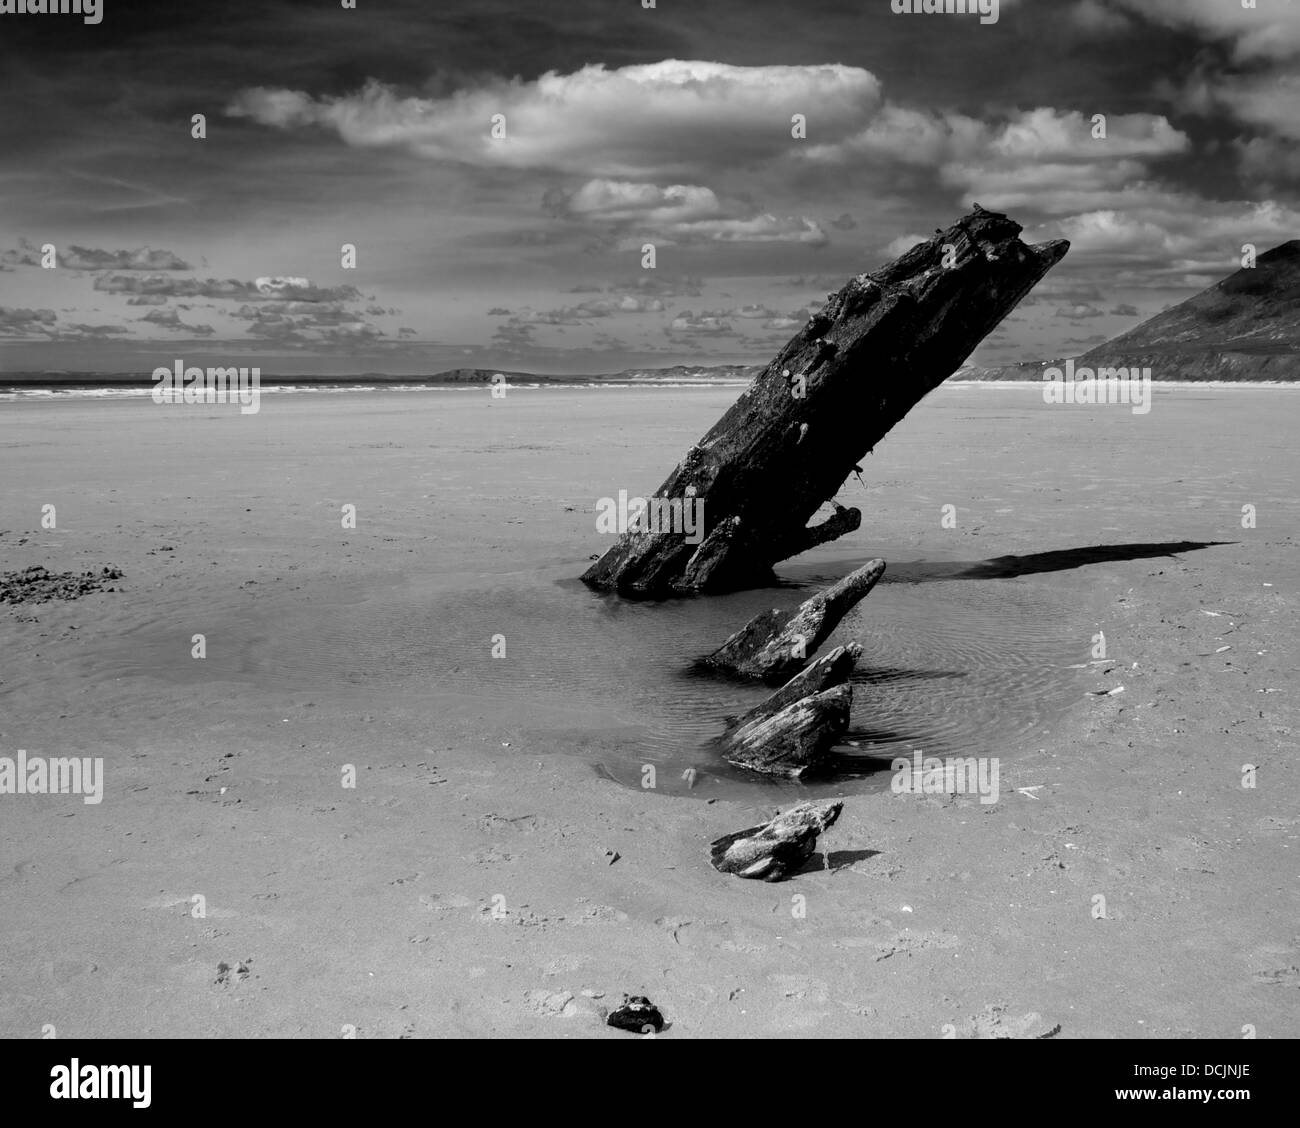 Shipwreck on the beach Stock Photo